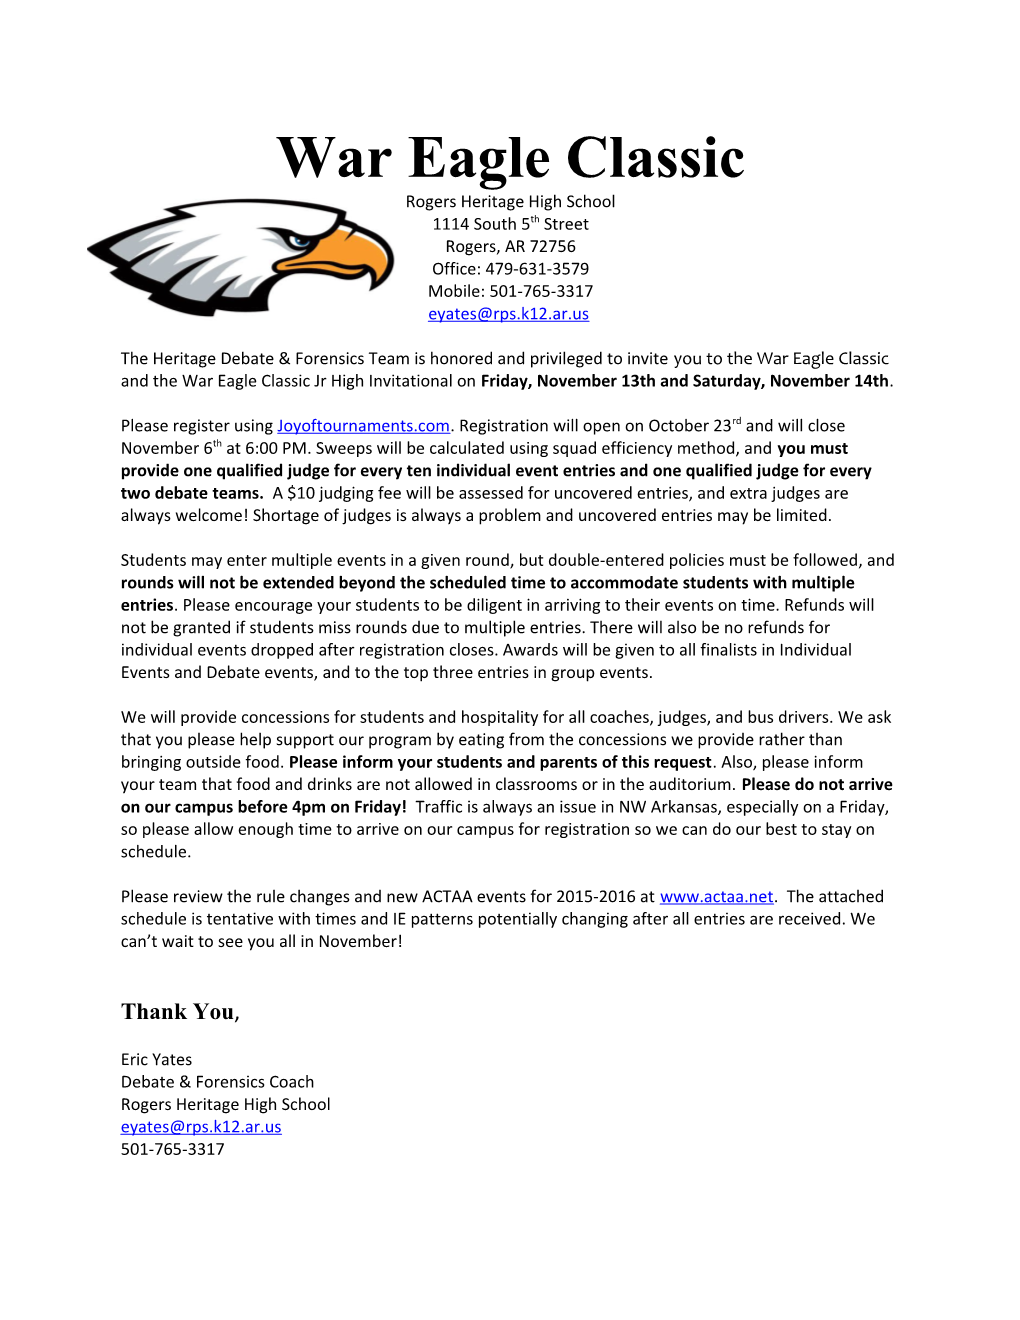 War Eagle Classic November 21-22